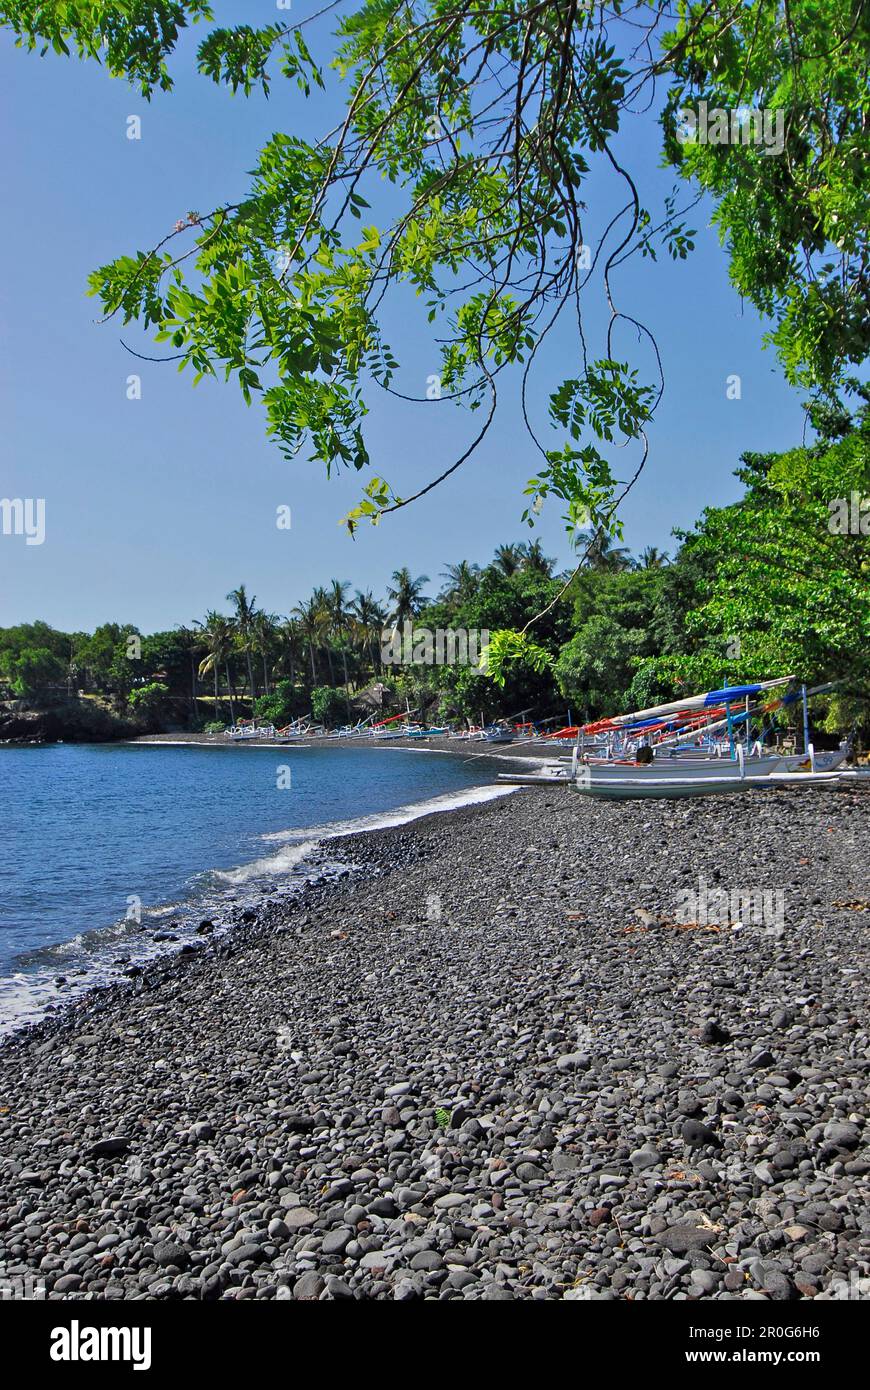 Boats lying on a stony beach under blue sky, Tulamben, East Bali, Indonesia, Asia Stock Photo